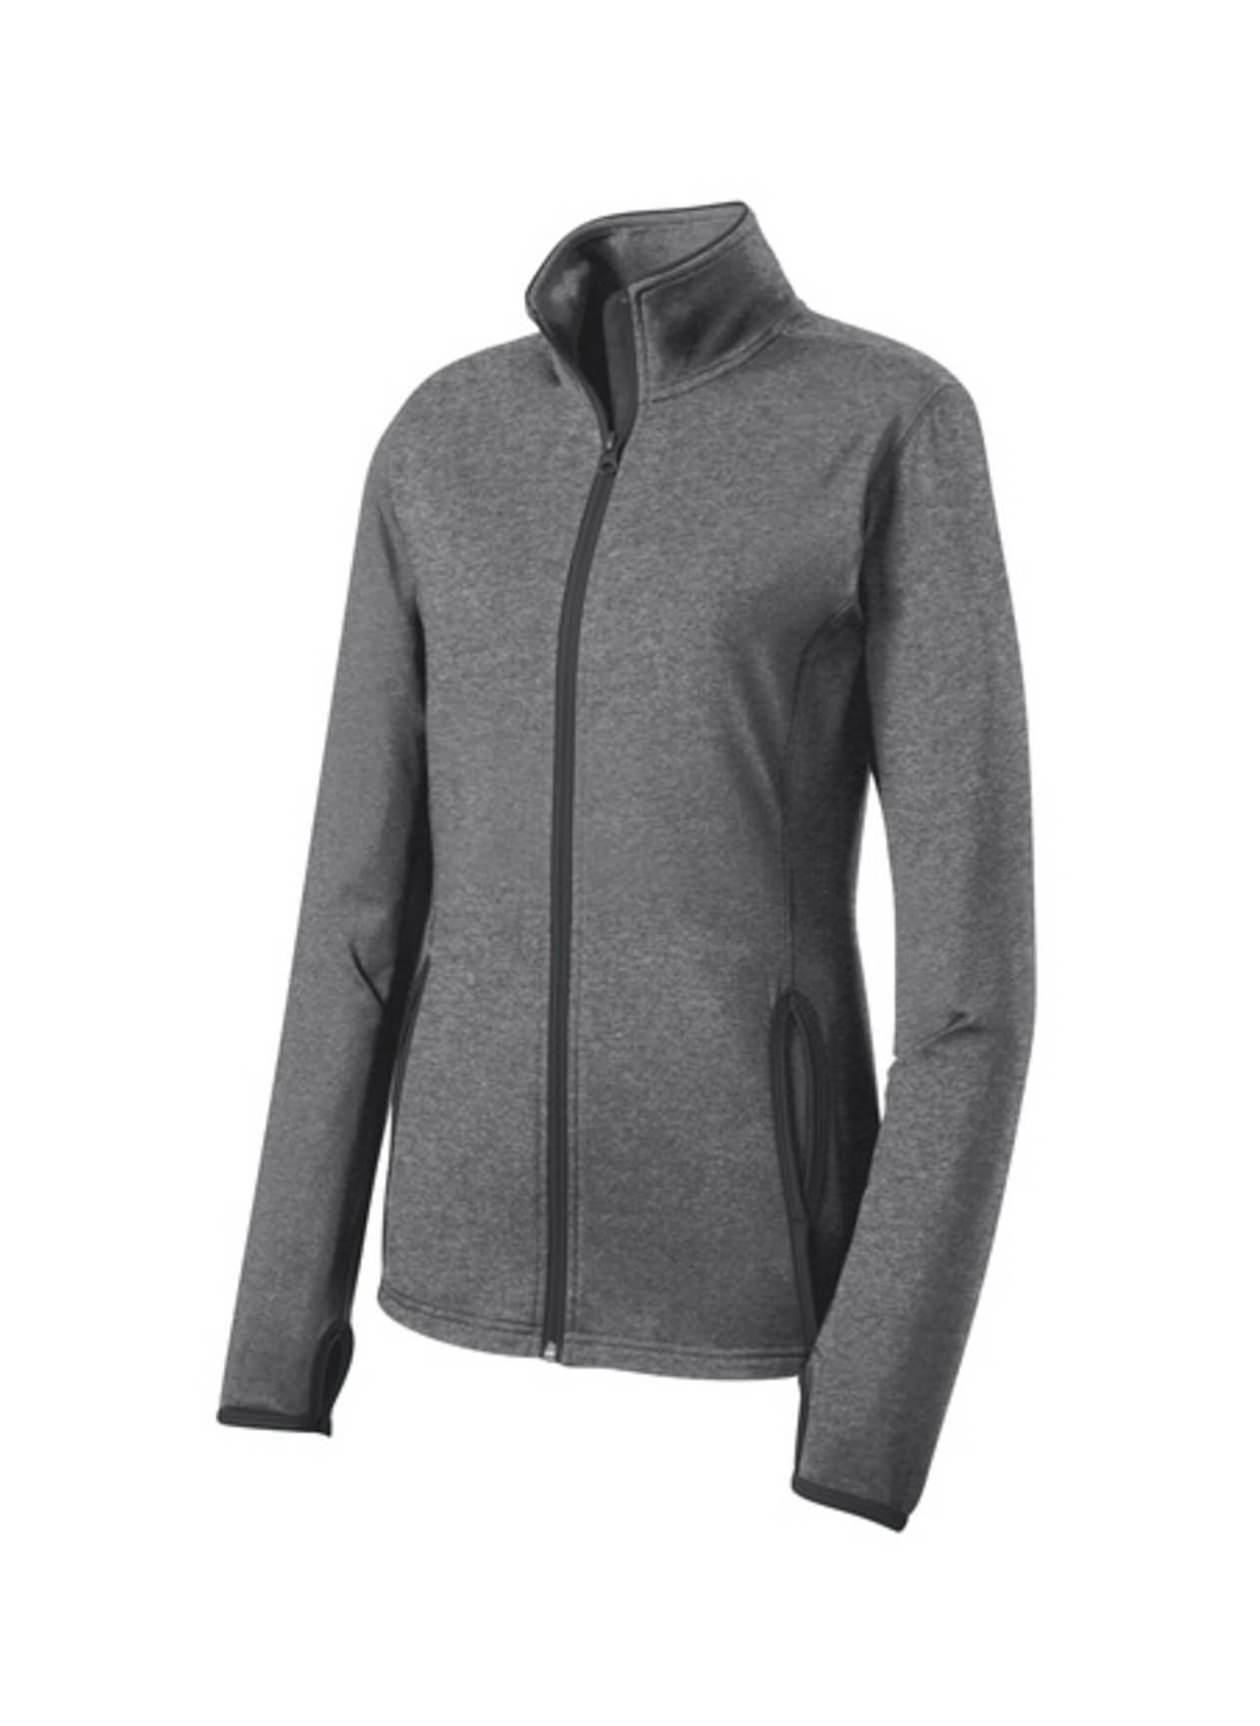 SPORT-TEK Women's Charcoal Grey Heather / Charcoal Grey Sport-Wick Stretch Contrast Jacket